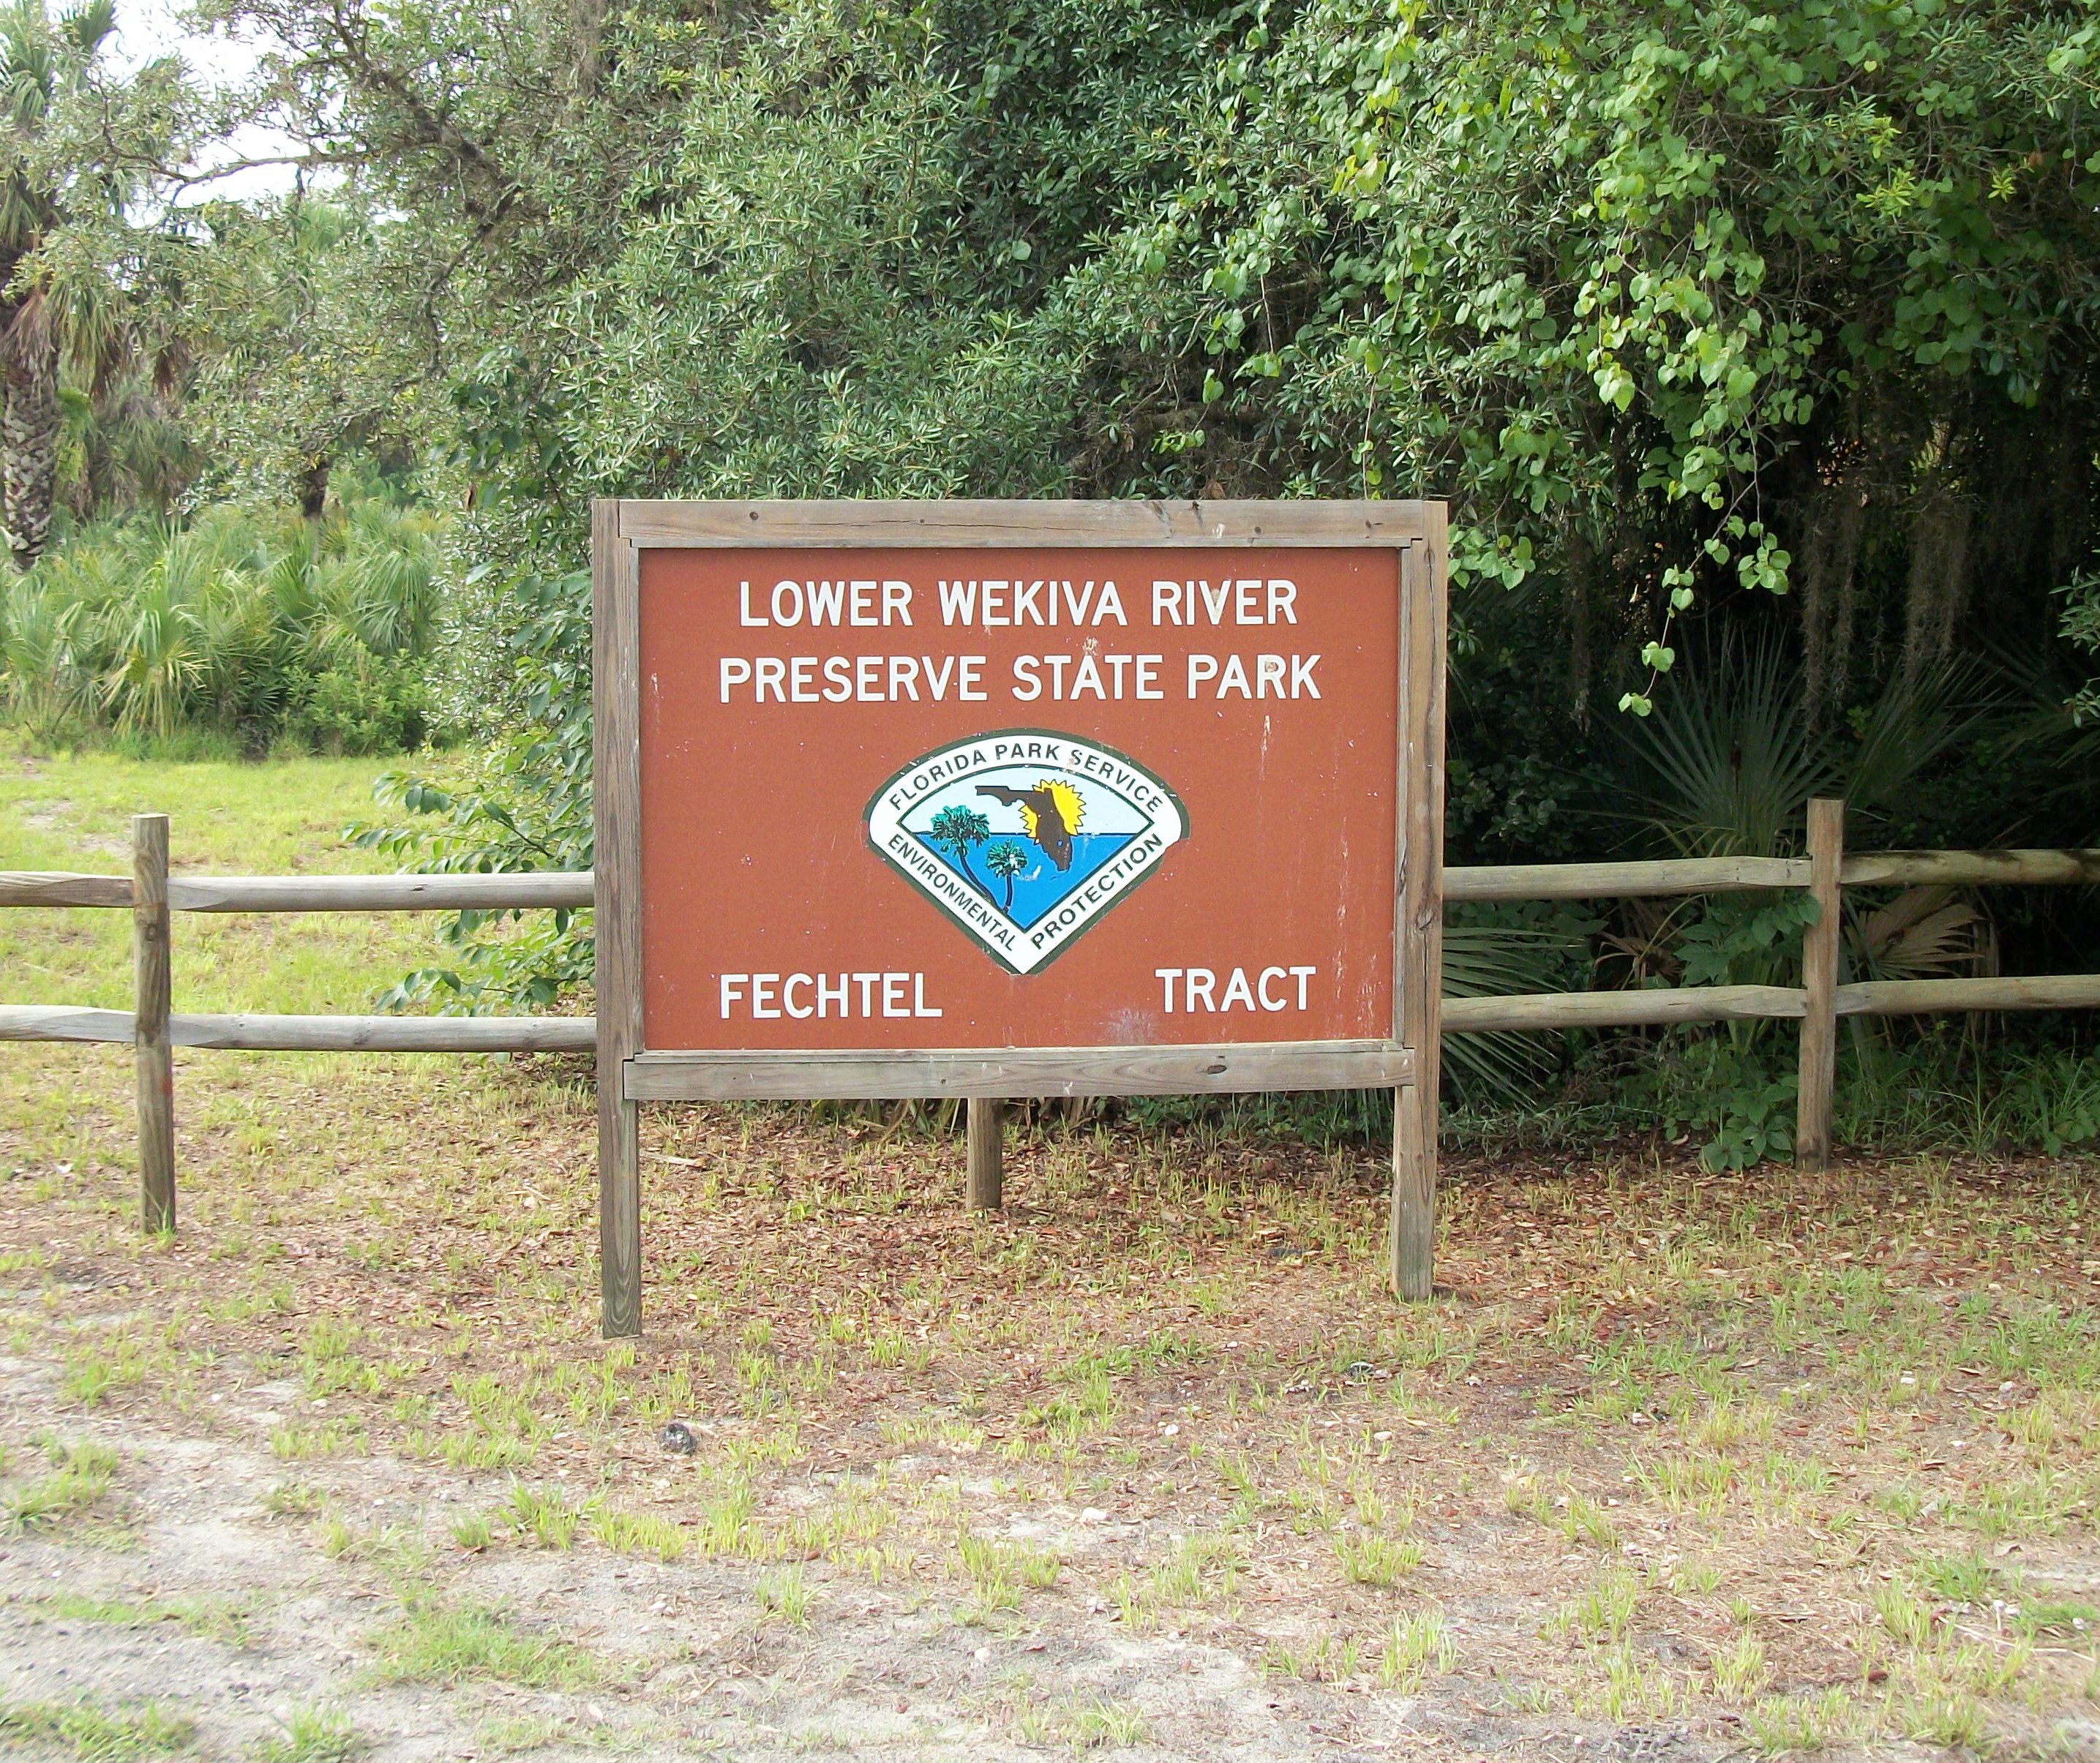 Fechtel sign at Lower Wekiva